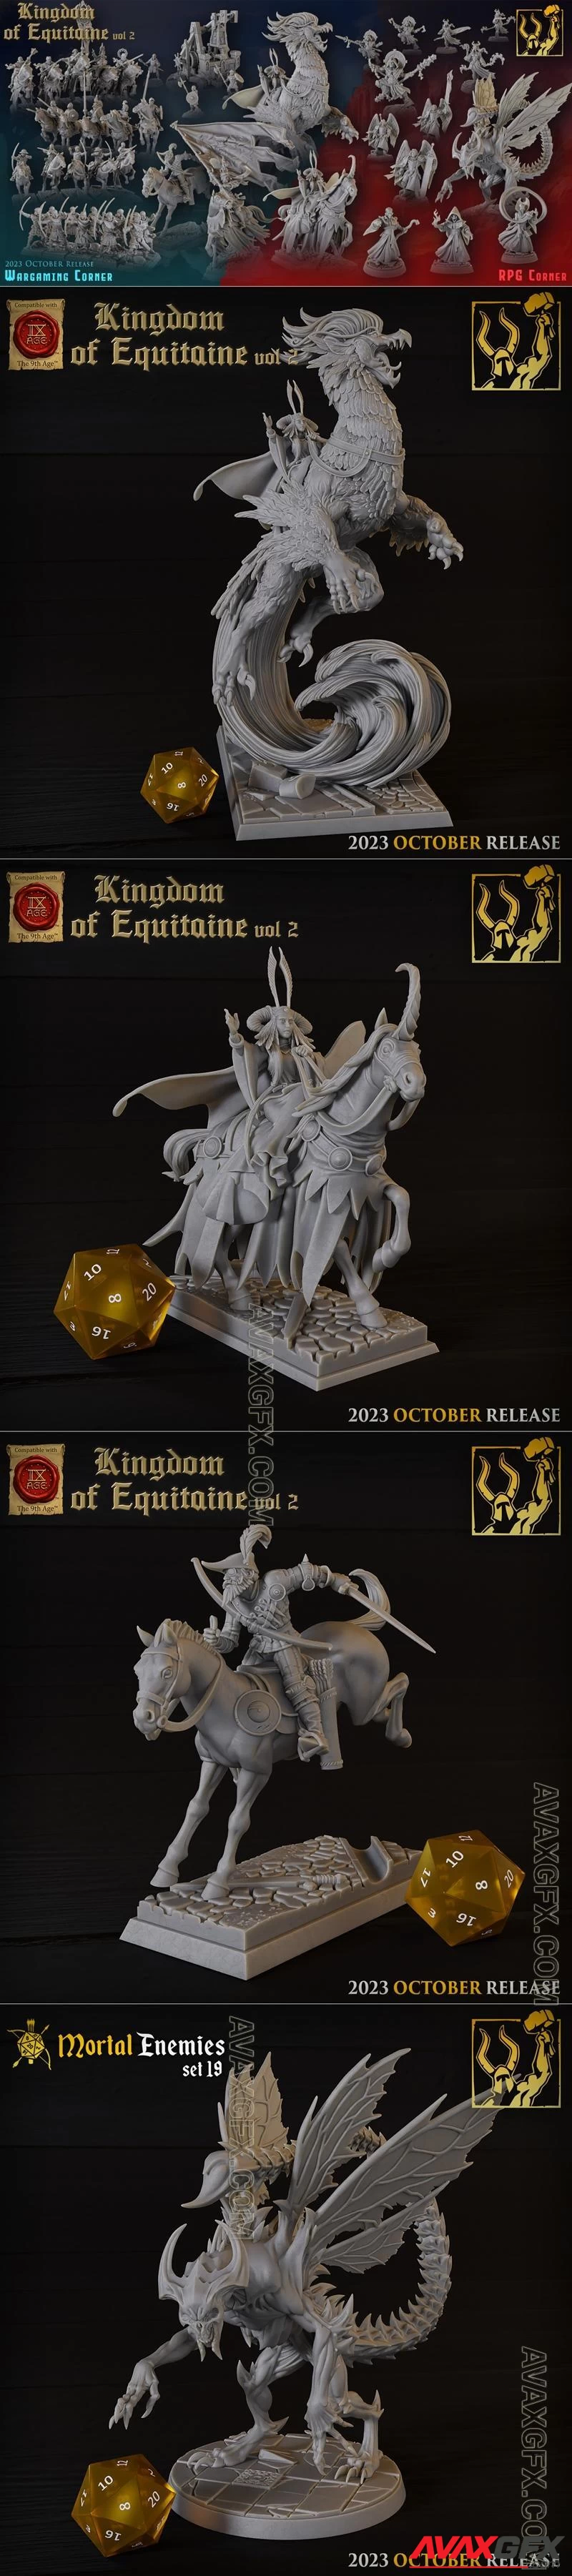 Titan Forge Miniatures - Kingdom of Equitaine vol.2 October 2023